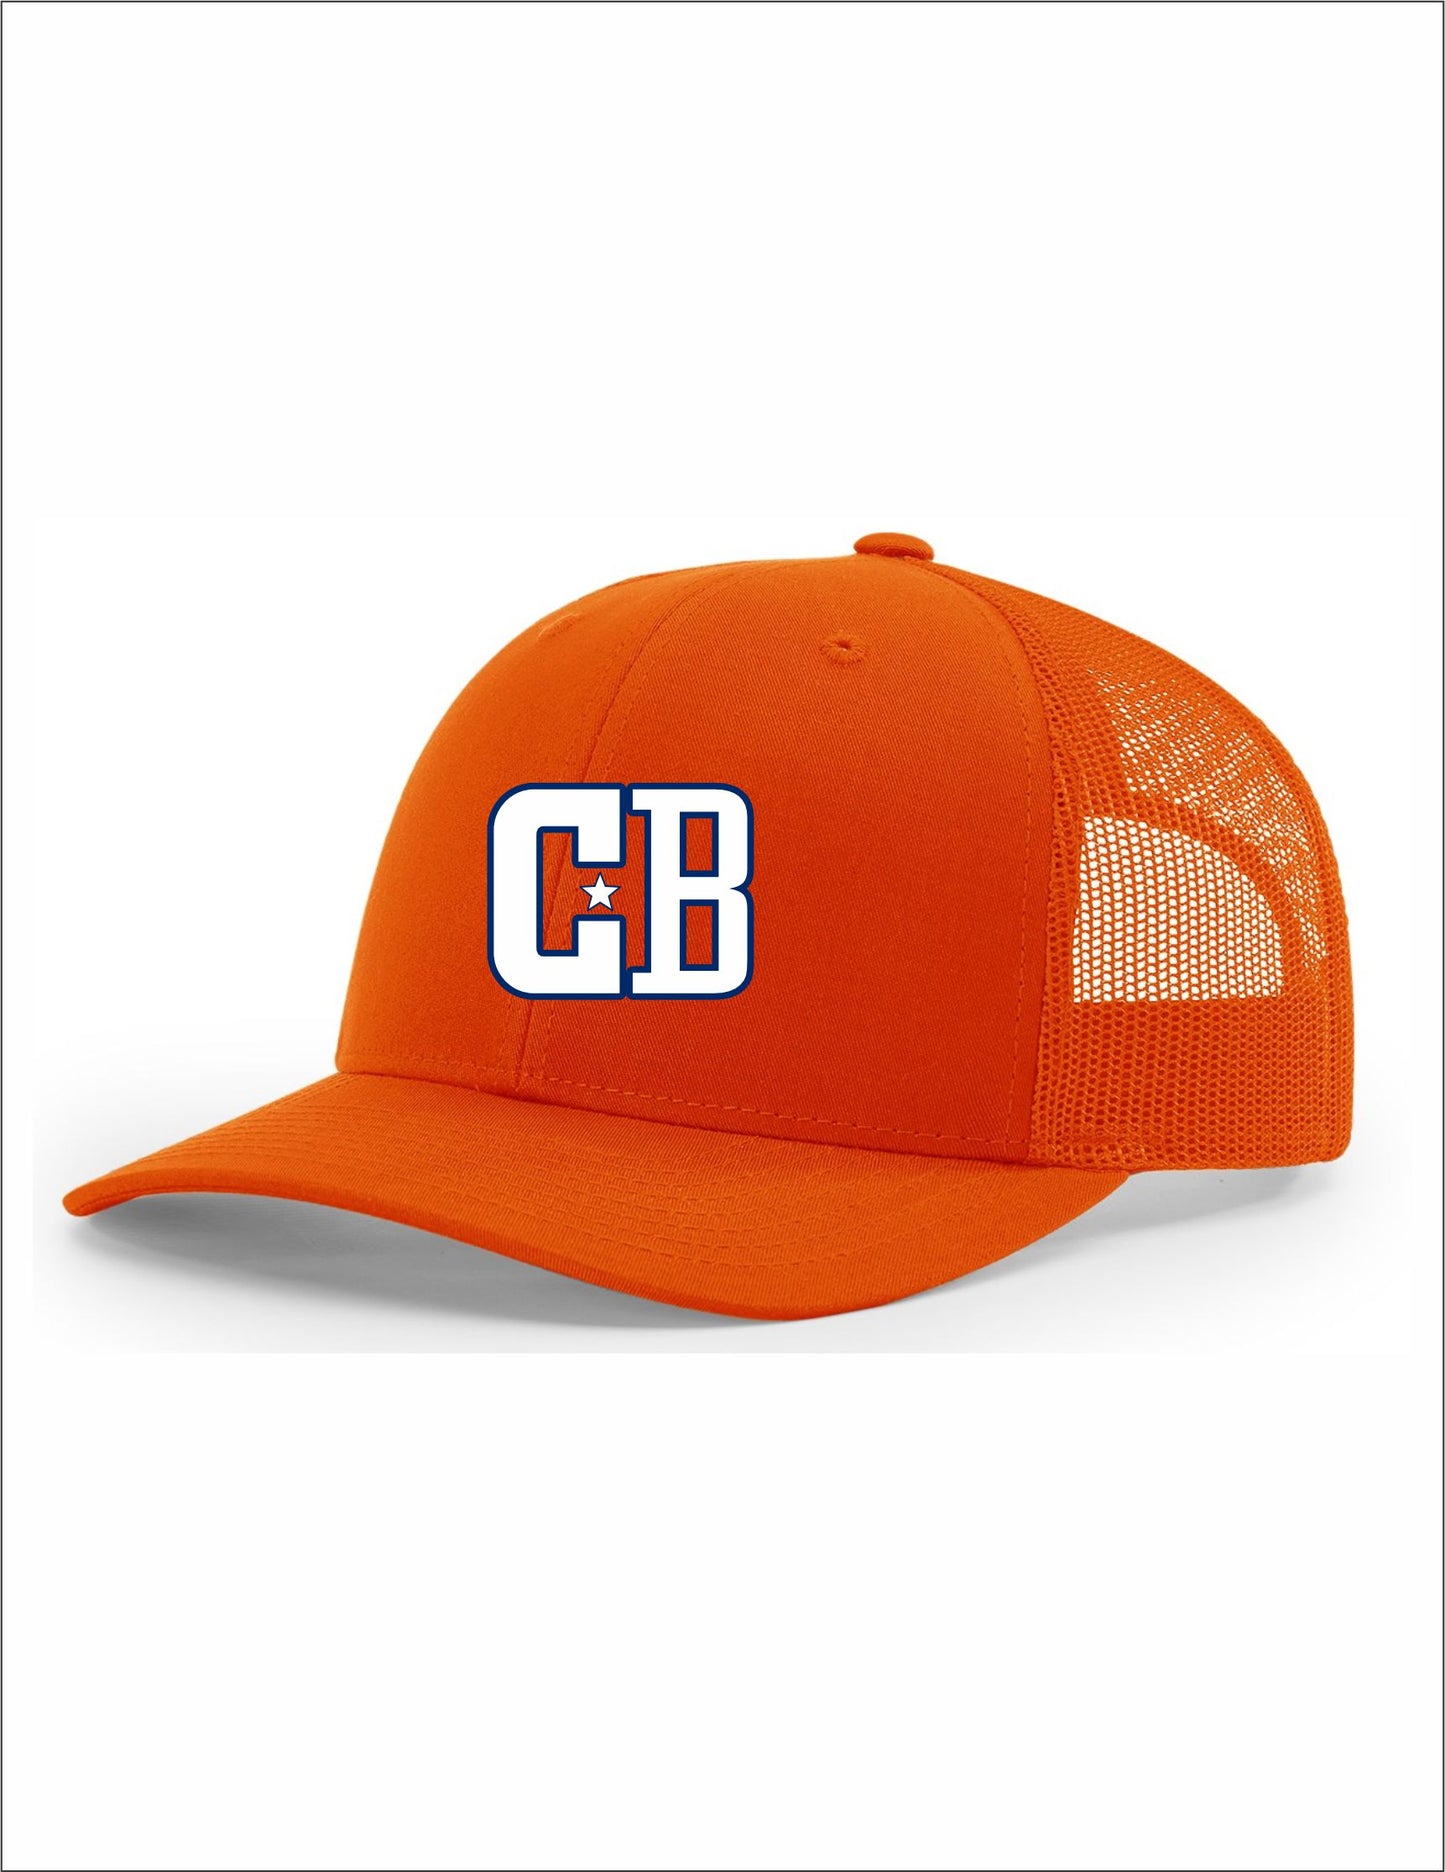 Cruz Baseball Embroidered Snap Back Cap